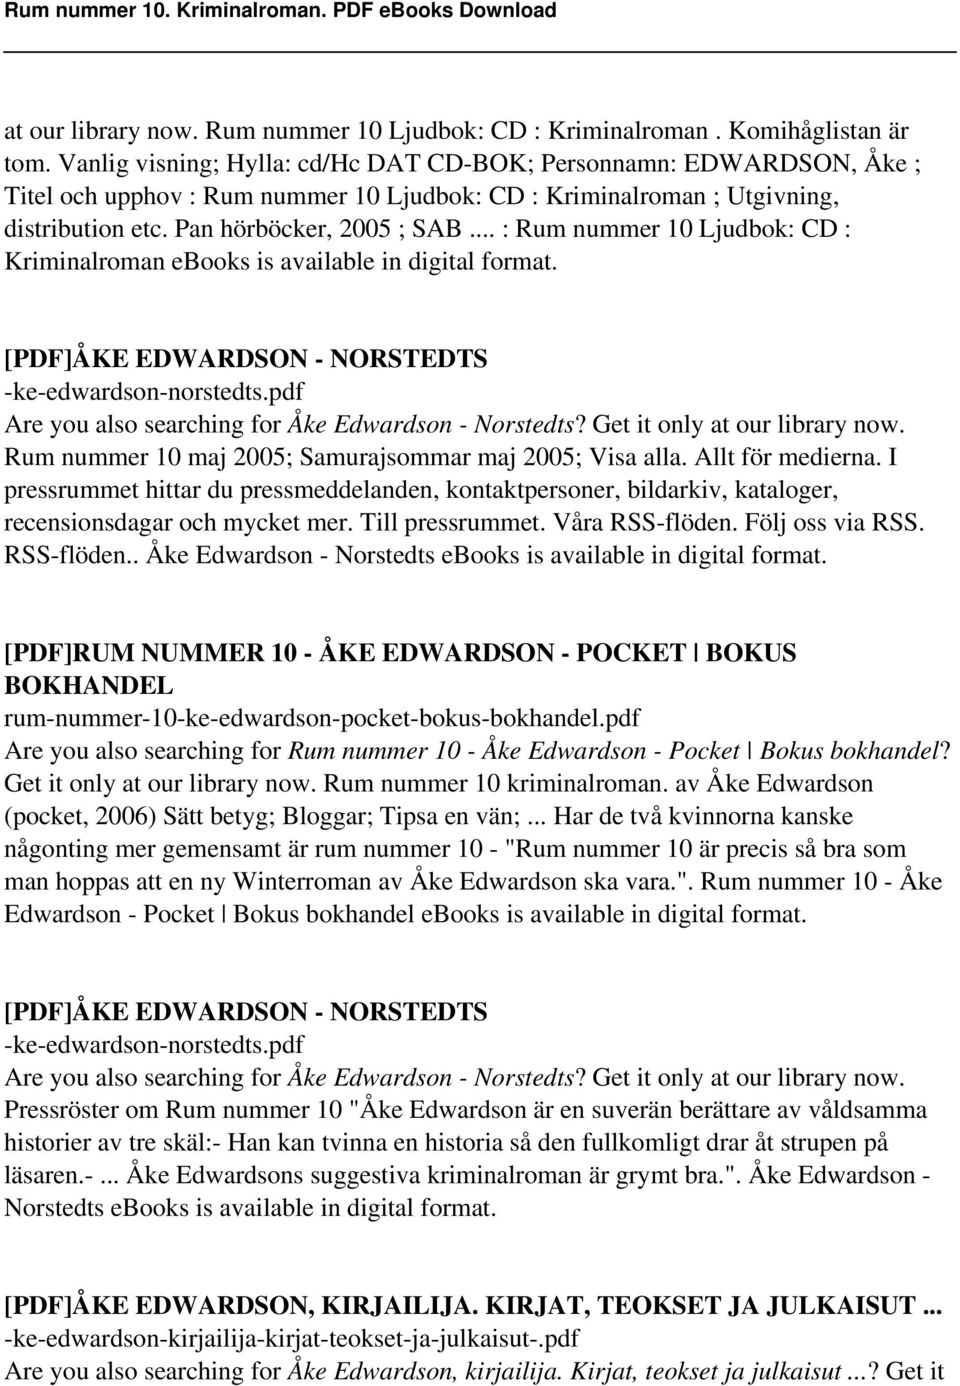 .. : Rum nummer 10 Ljudbok: CD : Kriminalroman ebooks is available in digital format. [PDF]ÅKE EDWARDSON - NORSTEDTS -ke-edwardson-norstedts.pdf Are you also searching for Åke Edwardson - Norstedts?